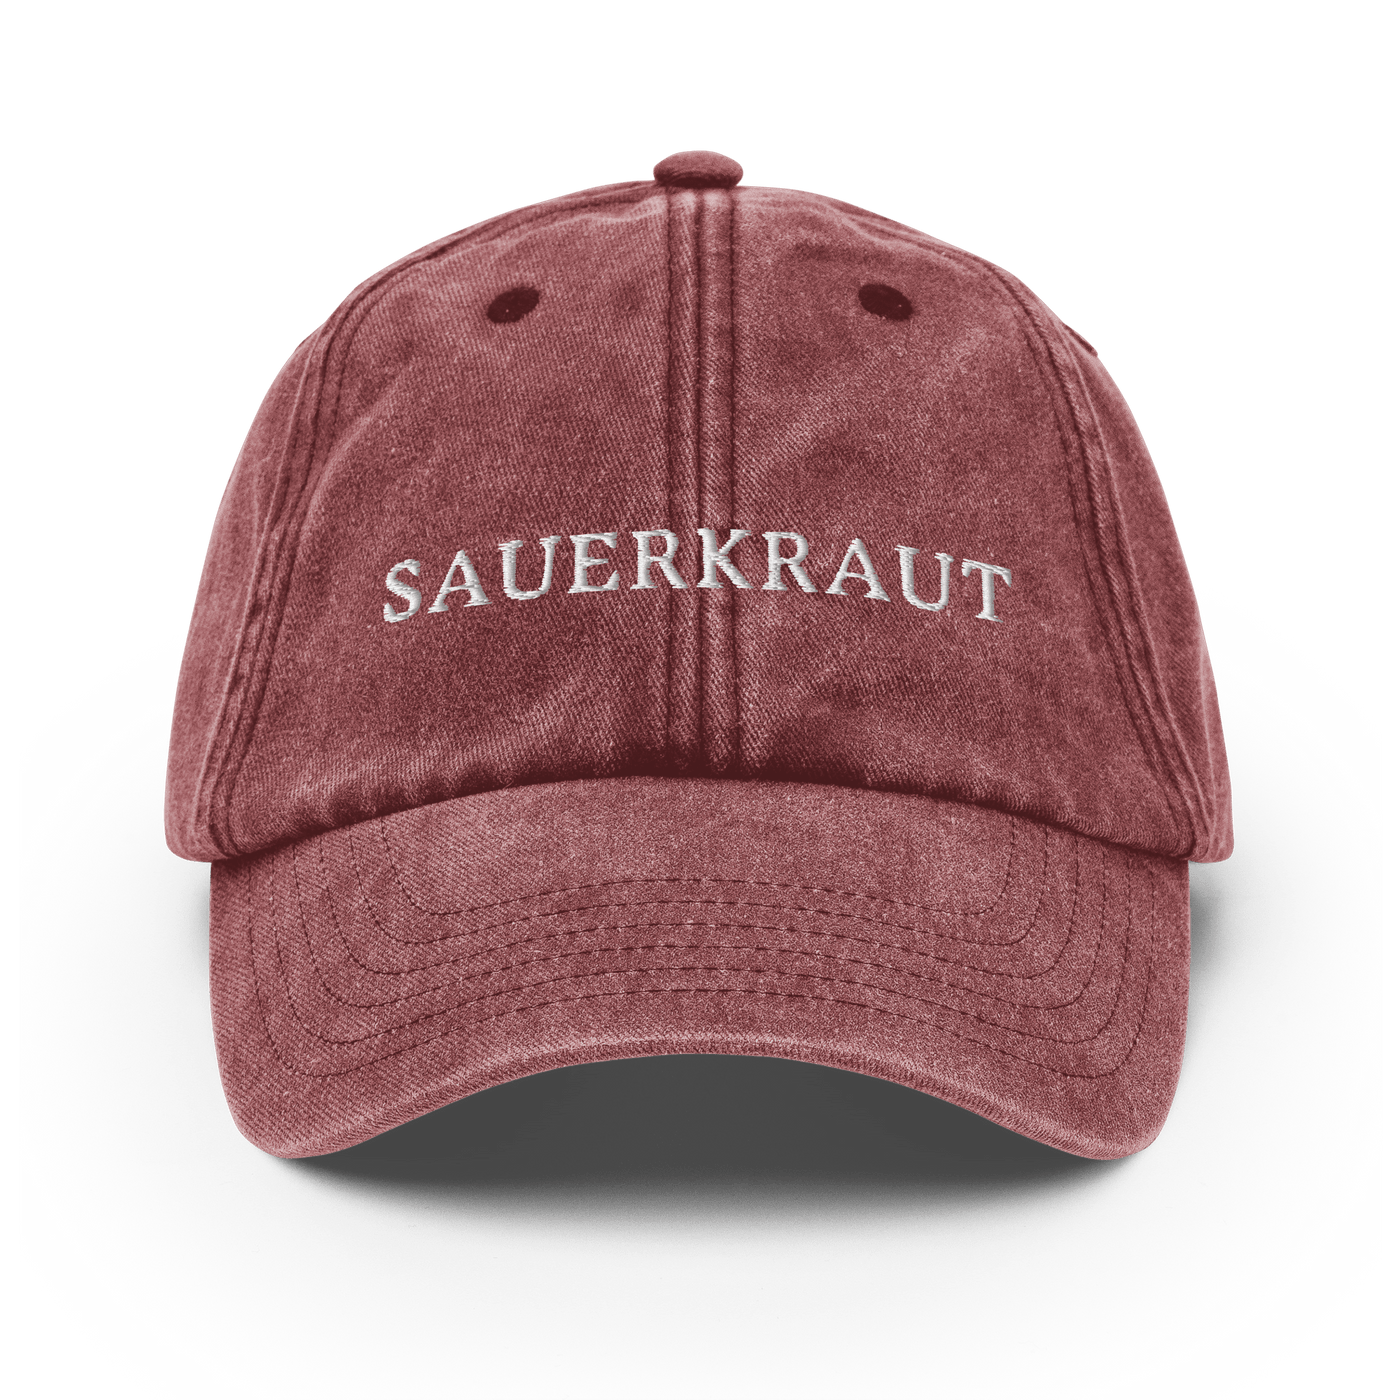 Sauerkraut Vintage Hat - Vintage Red - - Just Another Cap Store